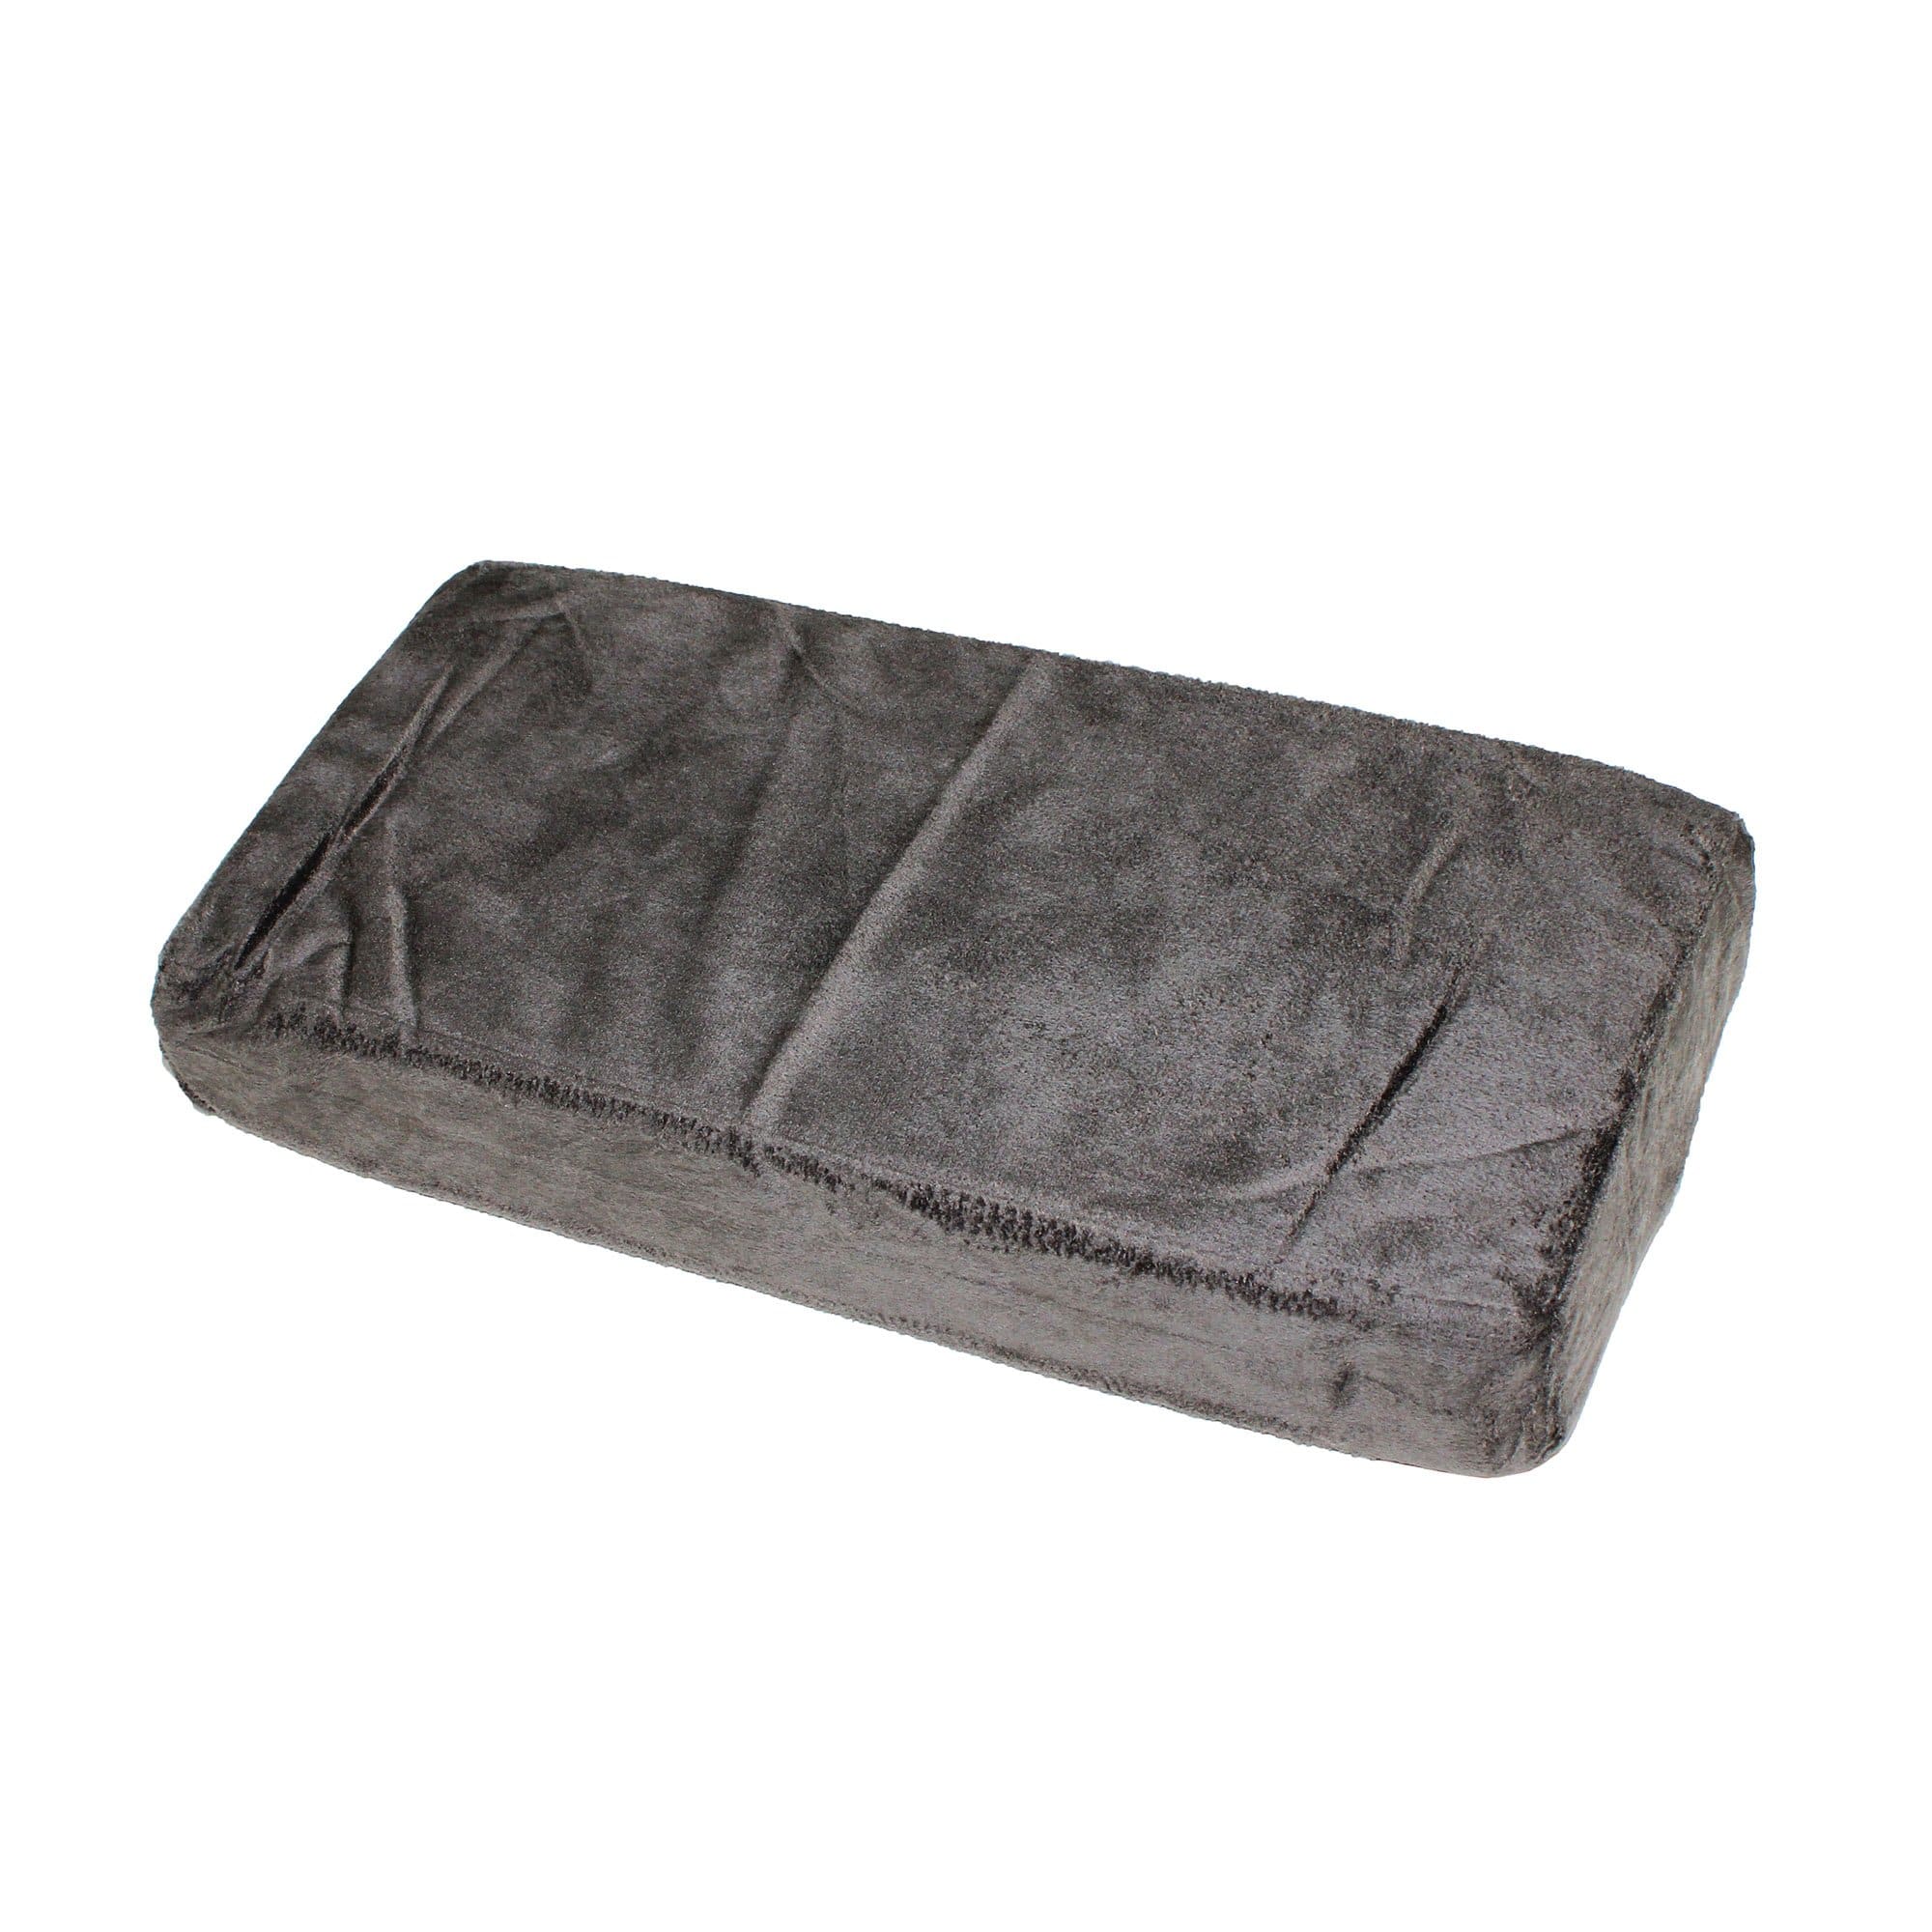 Trillium CCG-300 Memory Foam Console Cushion, Gray